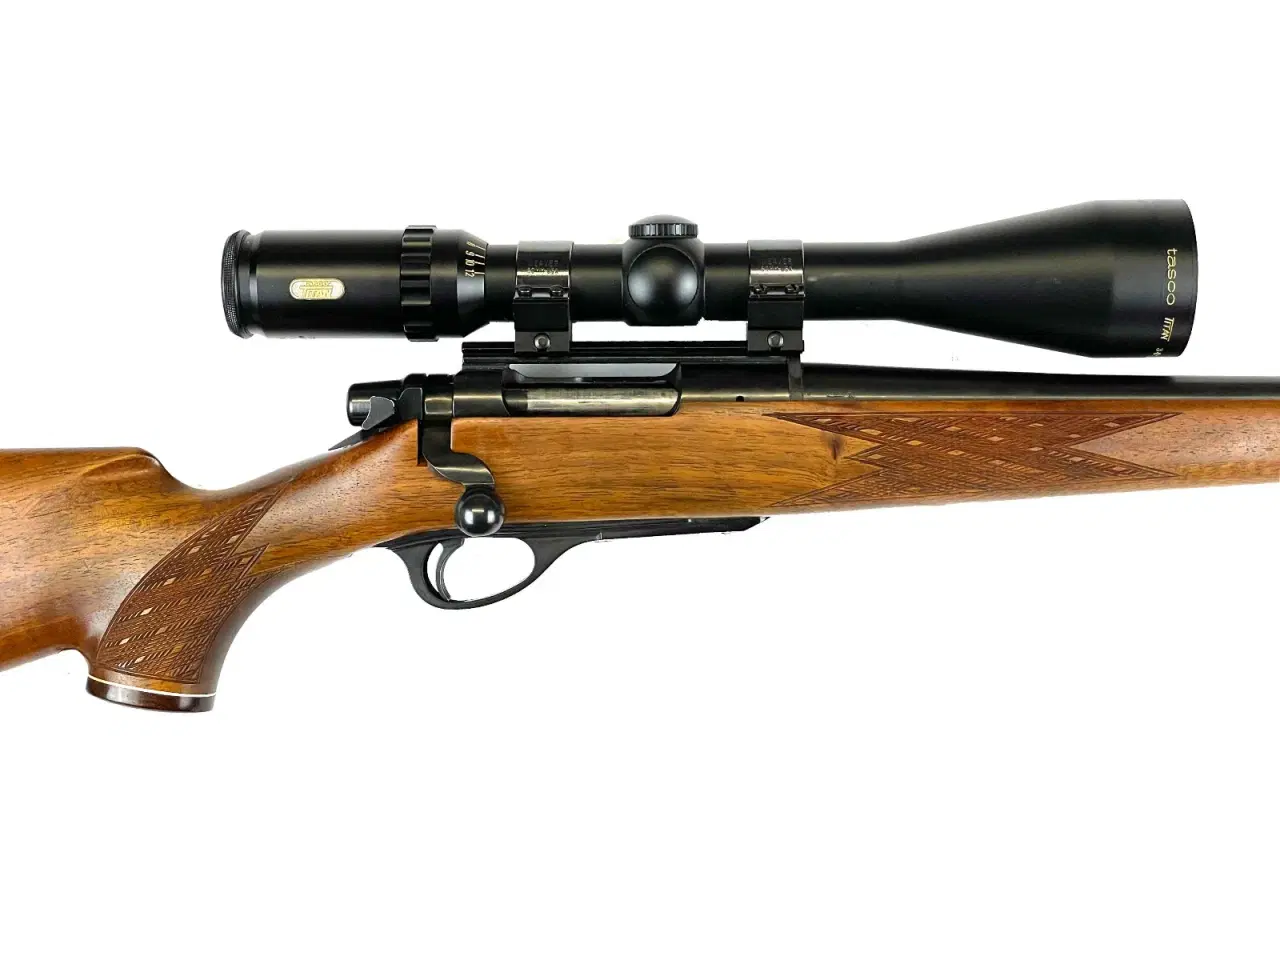 Billede 1 - Remington Mohawk 600 med kikkert